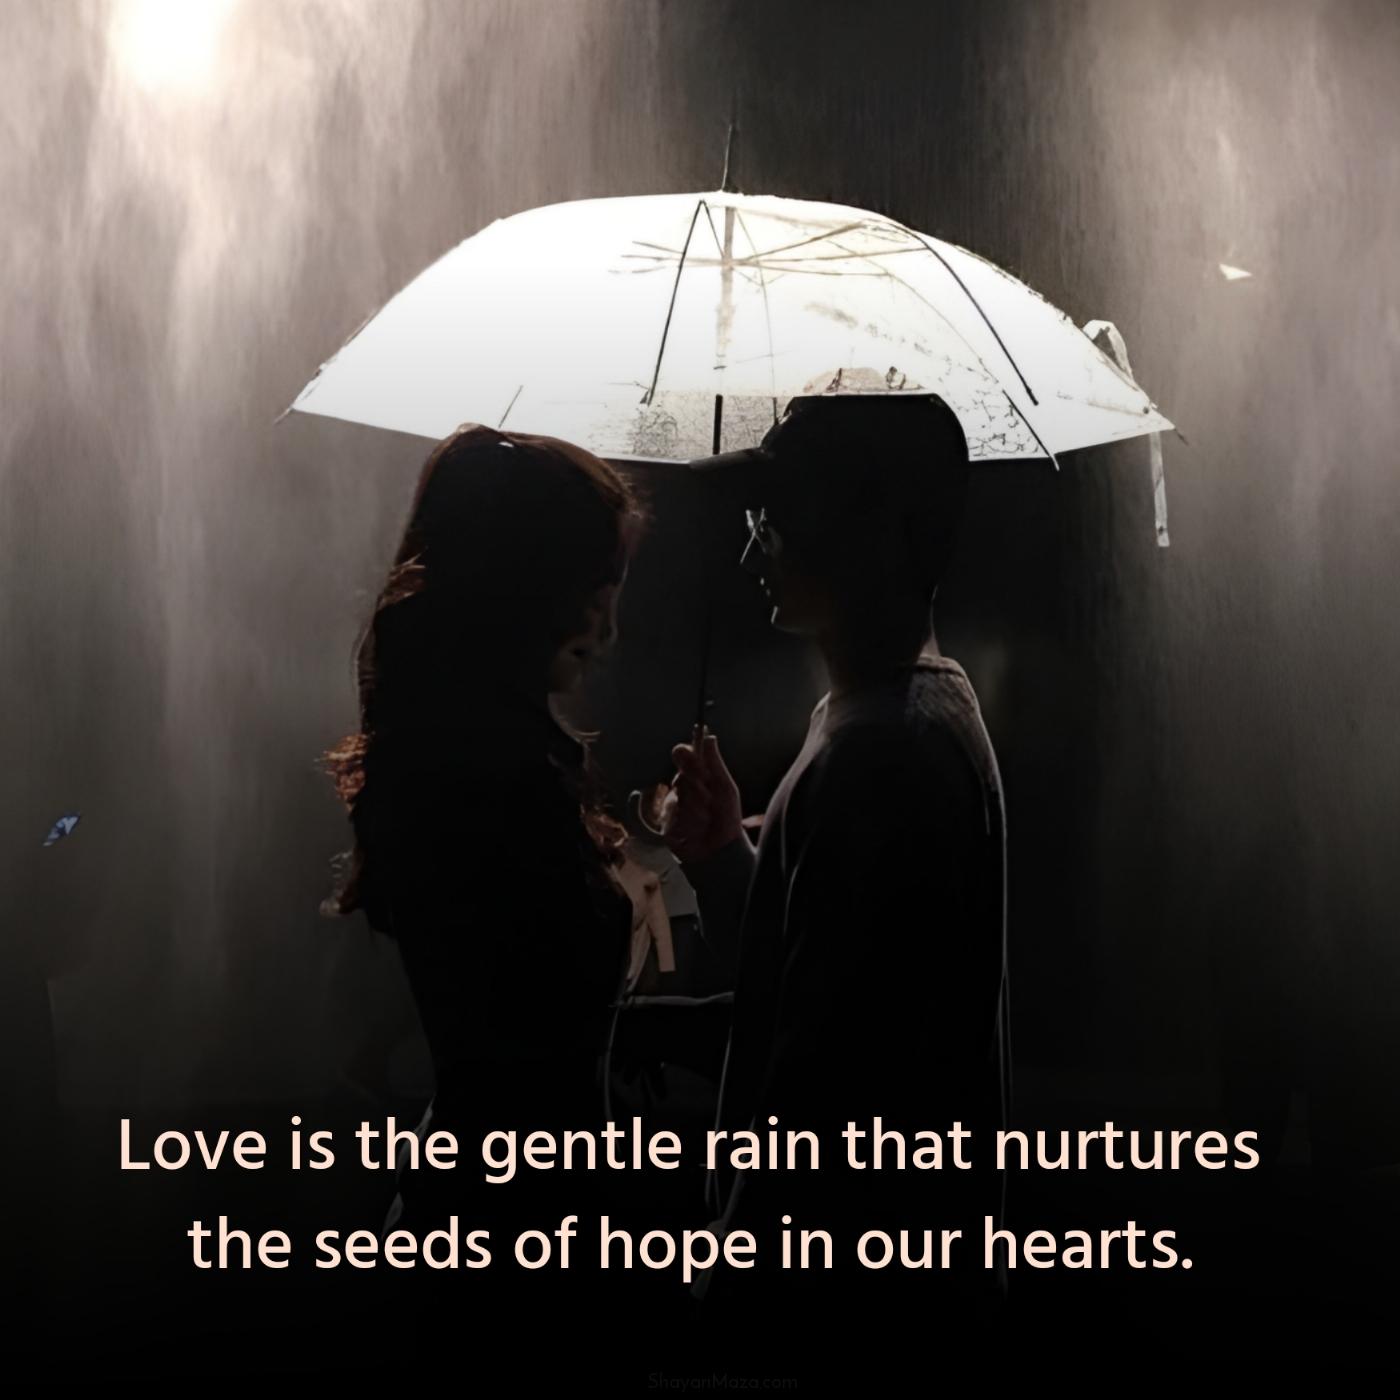 Love is the gentle rain that nurtures the seeds of hope